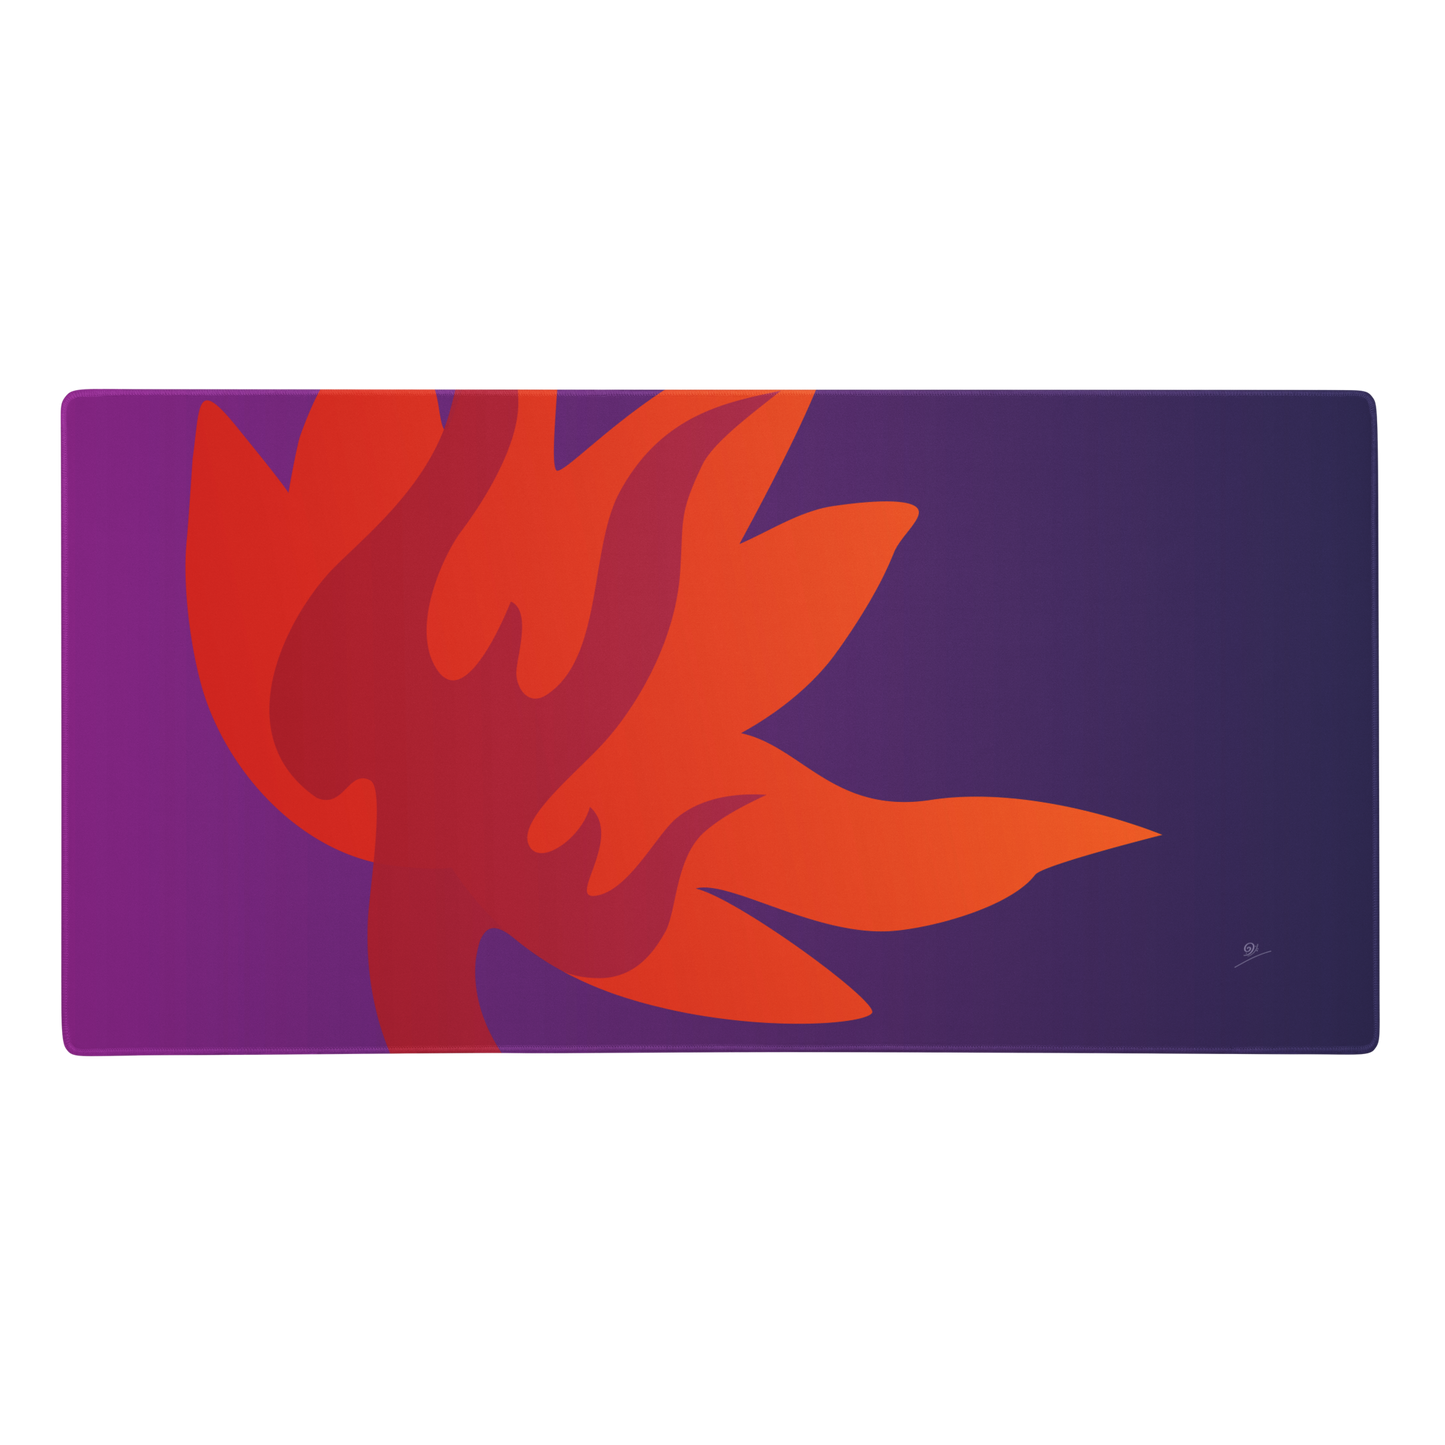 Flaming Lotus Gaming Mouse Pad